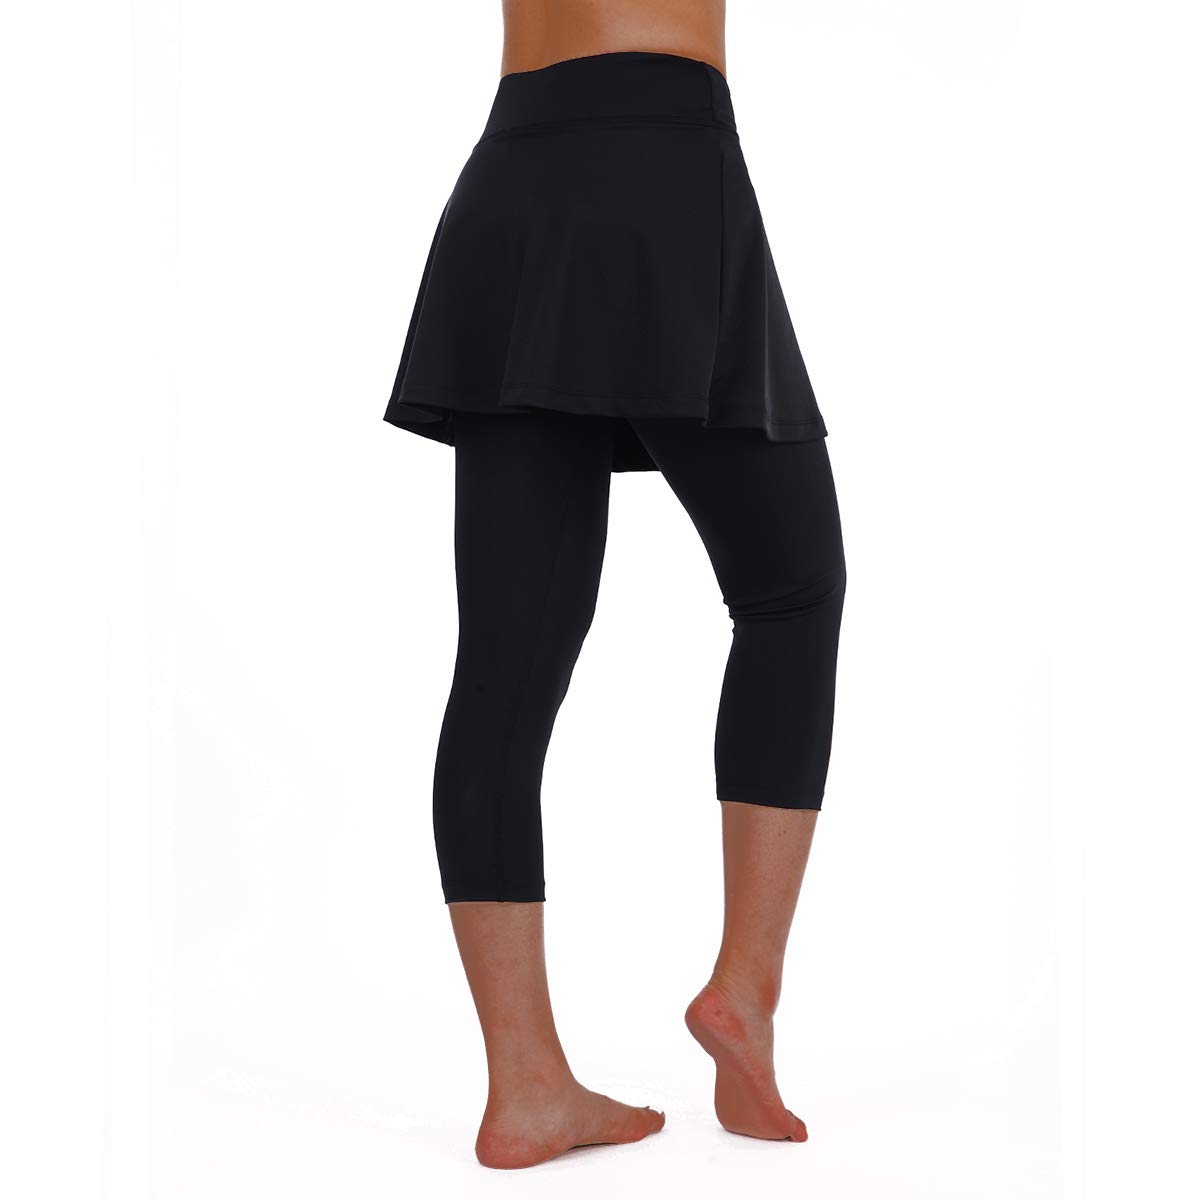 Buy ANIVIVO Skirted Yoga Legging for Women,Skirted Capri Tennis Leggings  Pants&Tennis Clothing Legging with Skirts(Black-Legnth,XS) at Amazon.in